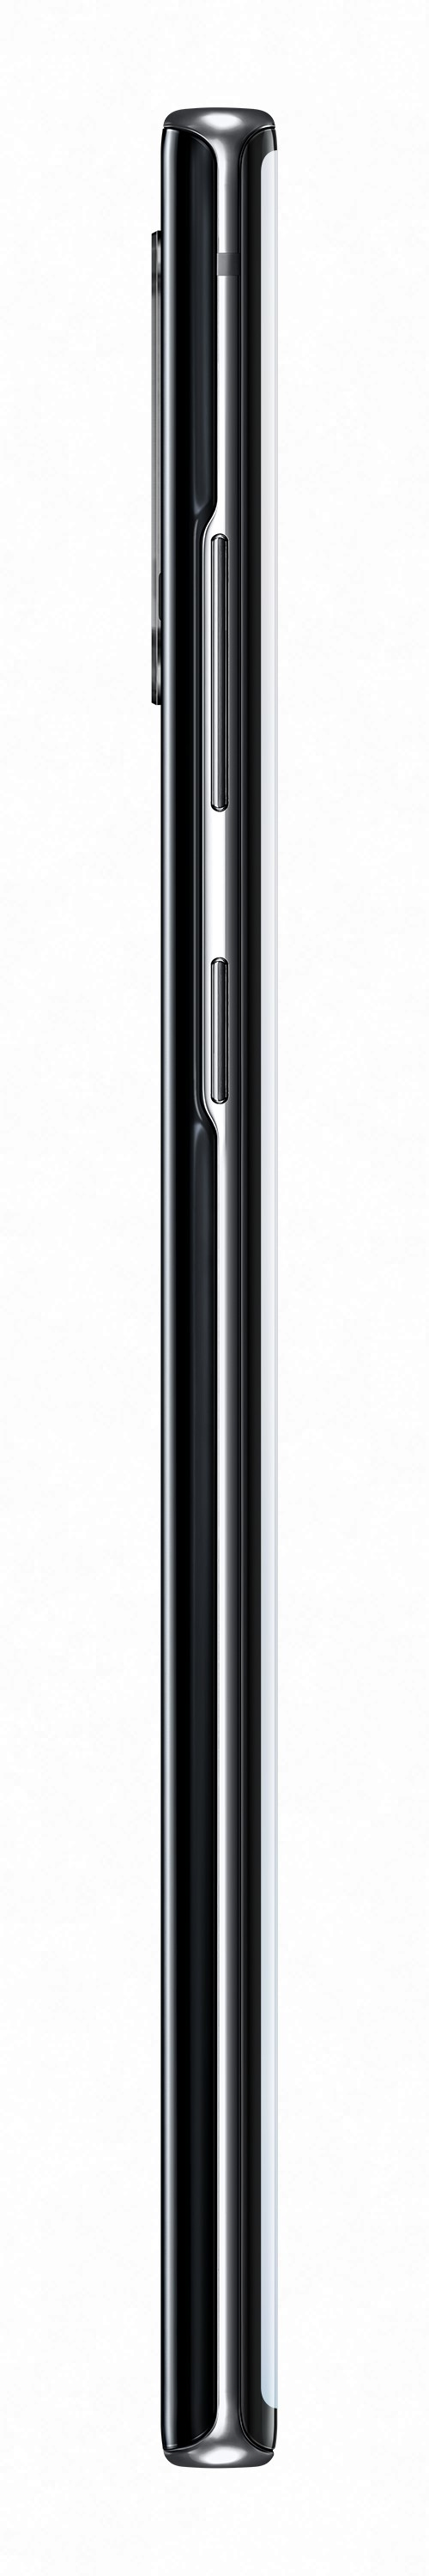 Samsung Galaxy Note10+ Smartphone 512GB Aura Black